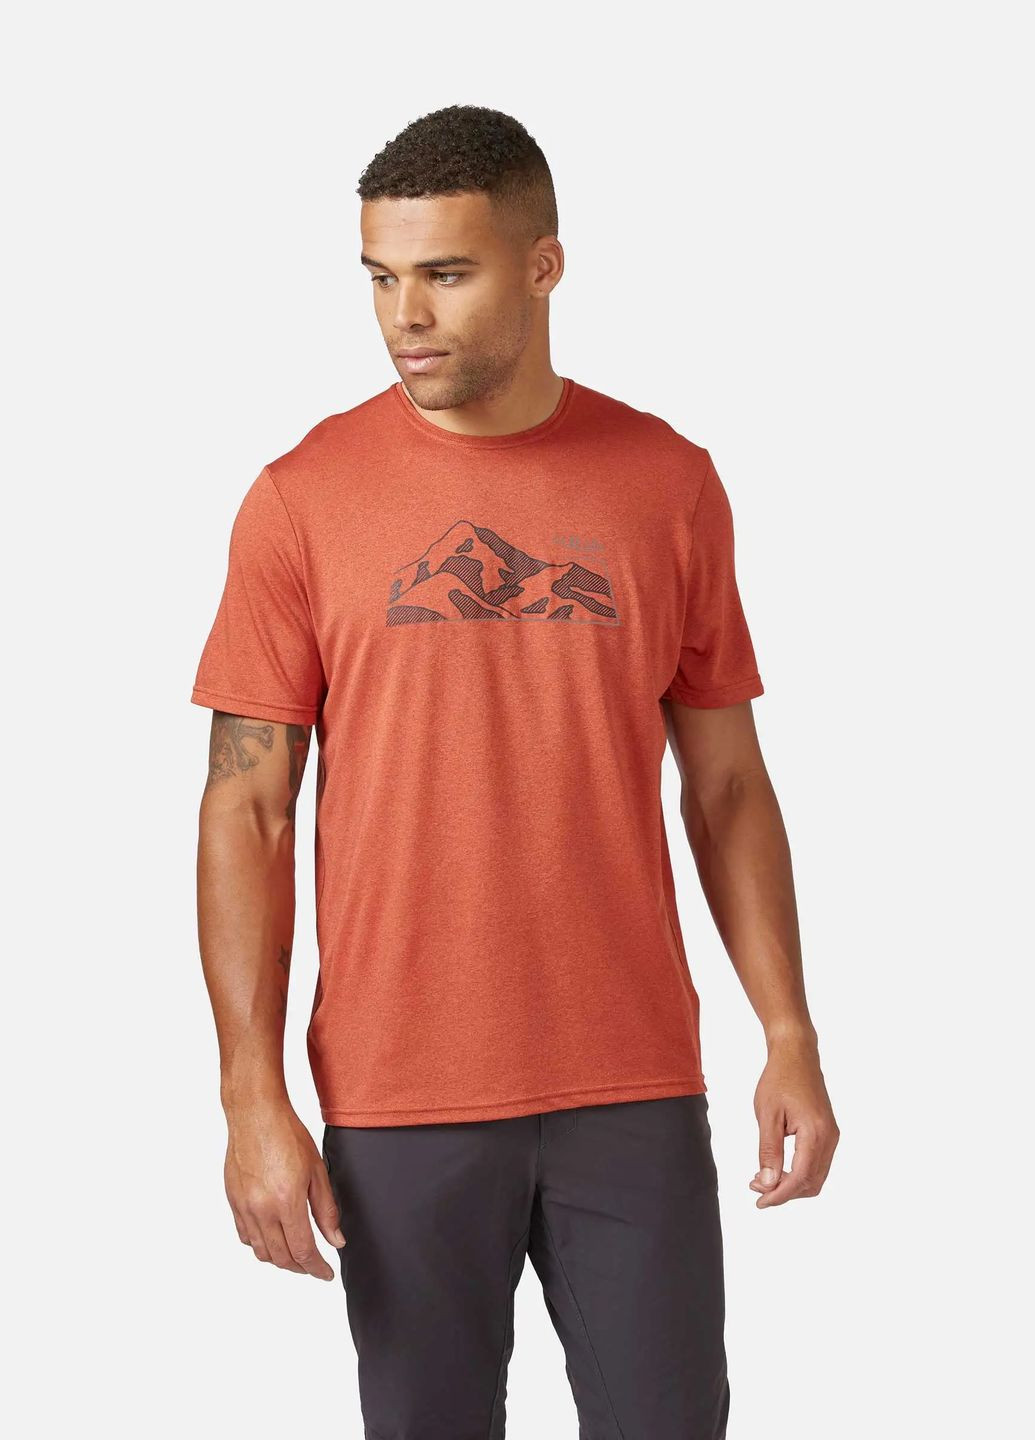 Коралловая футболка mantle mountain tee Rab